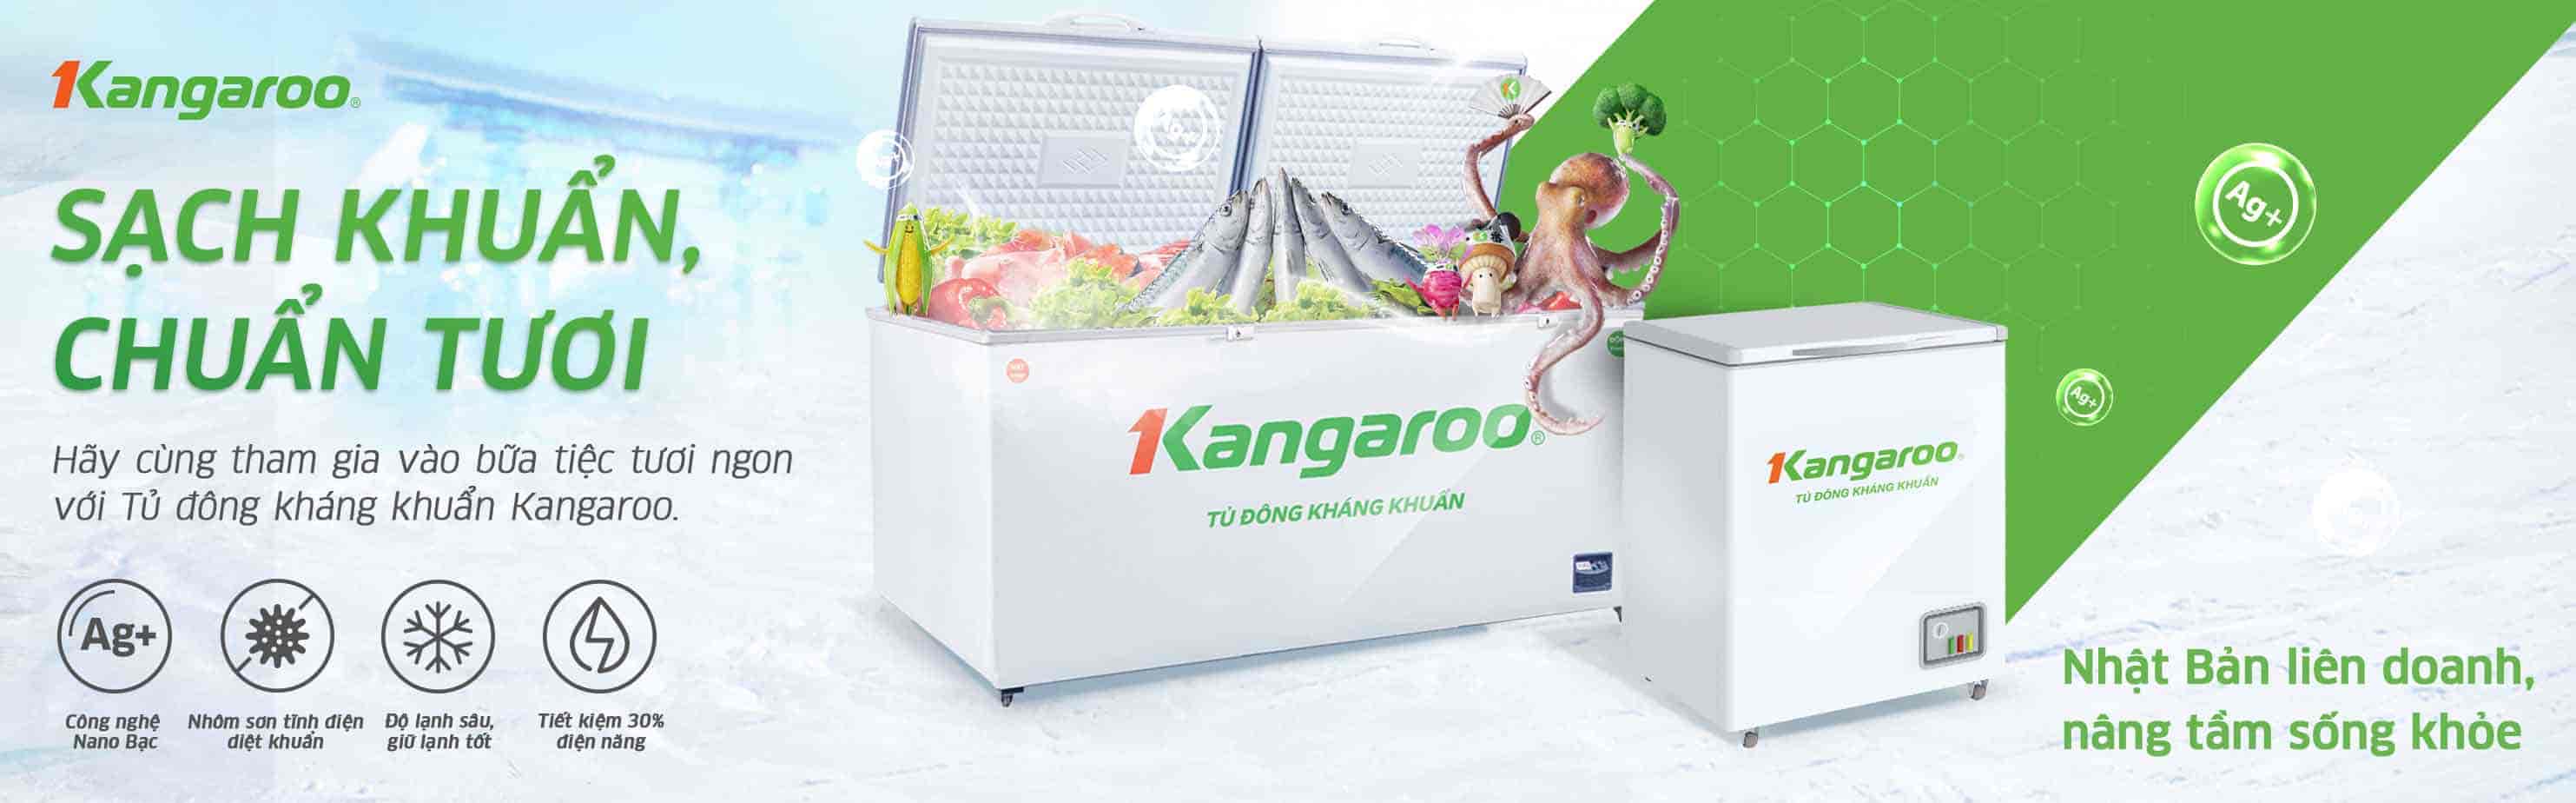 kangaroo.com.vn